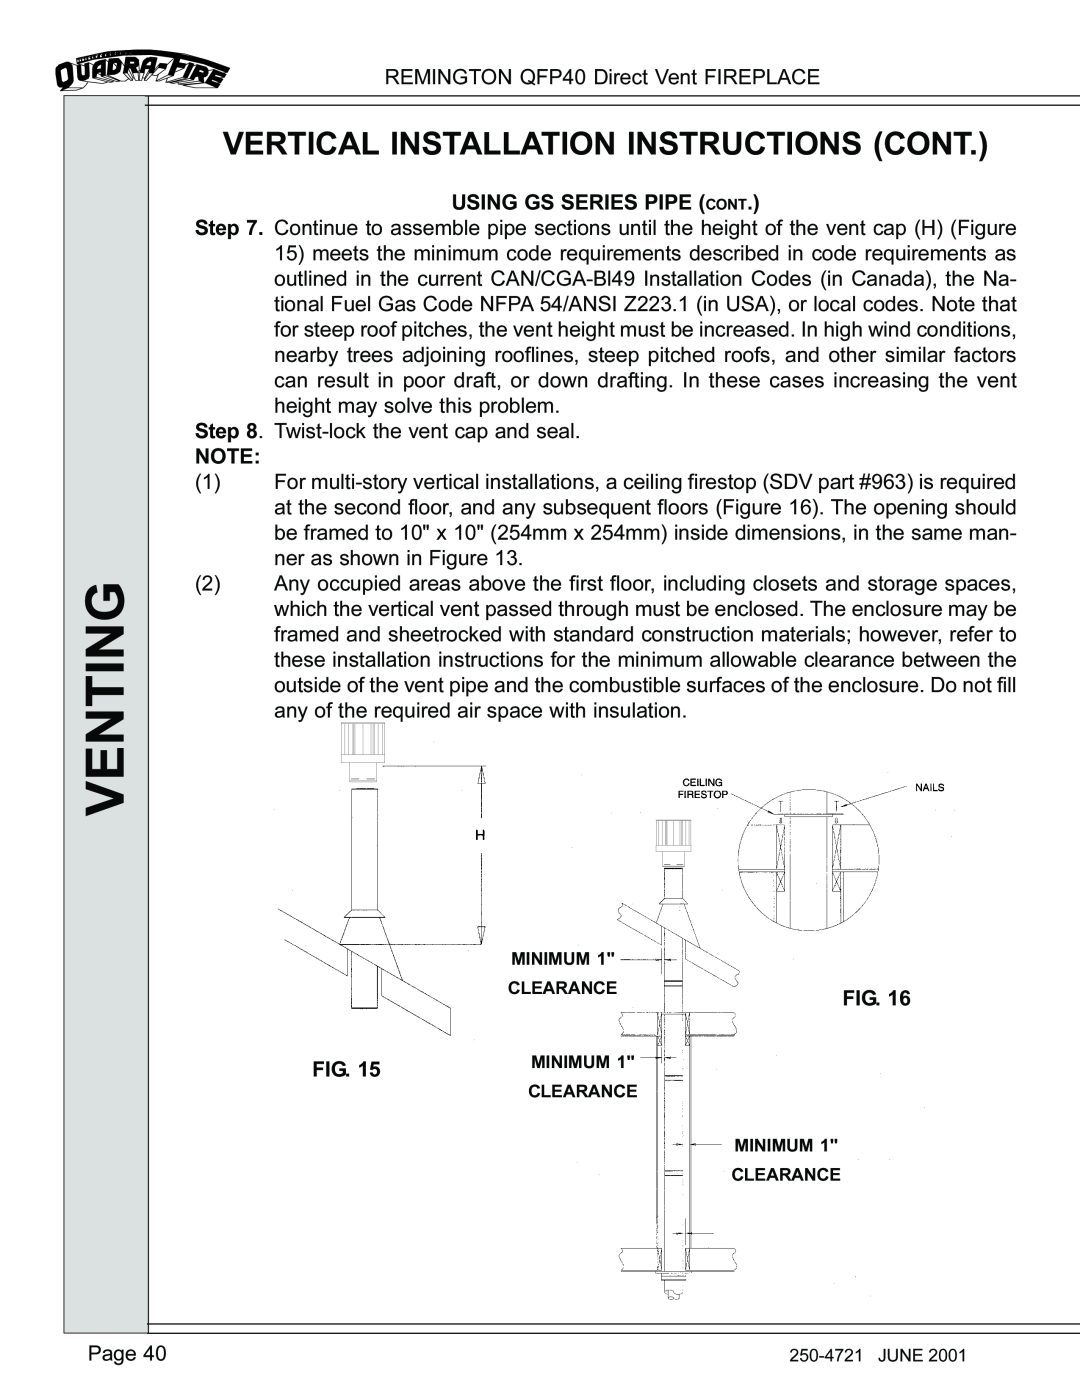 Remington QFP40 manual Vertical Installation Instructions Cont, Venting 